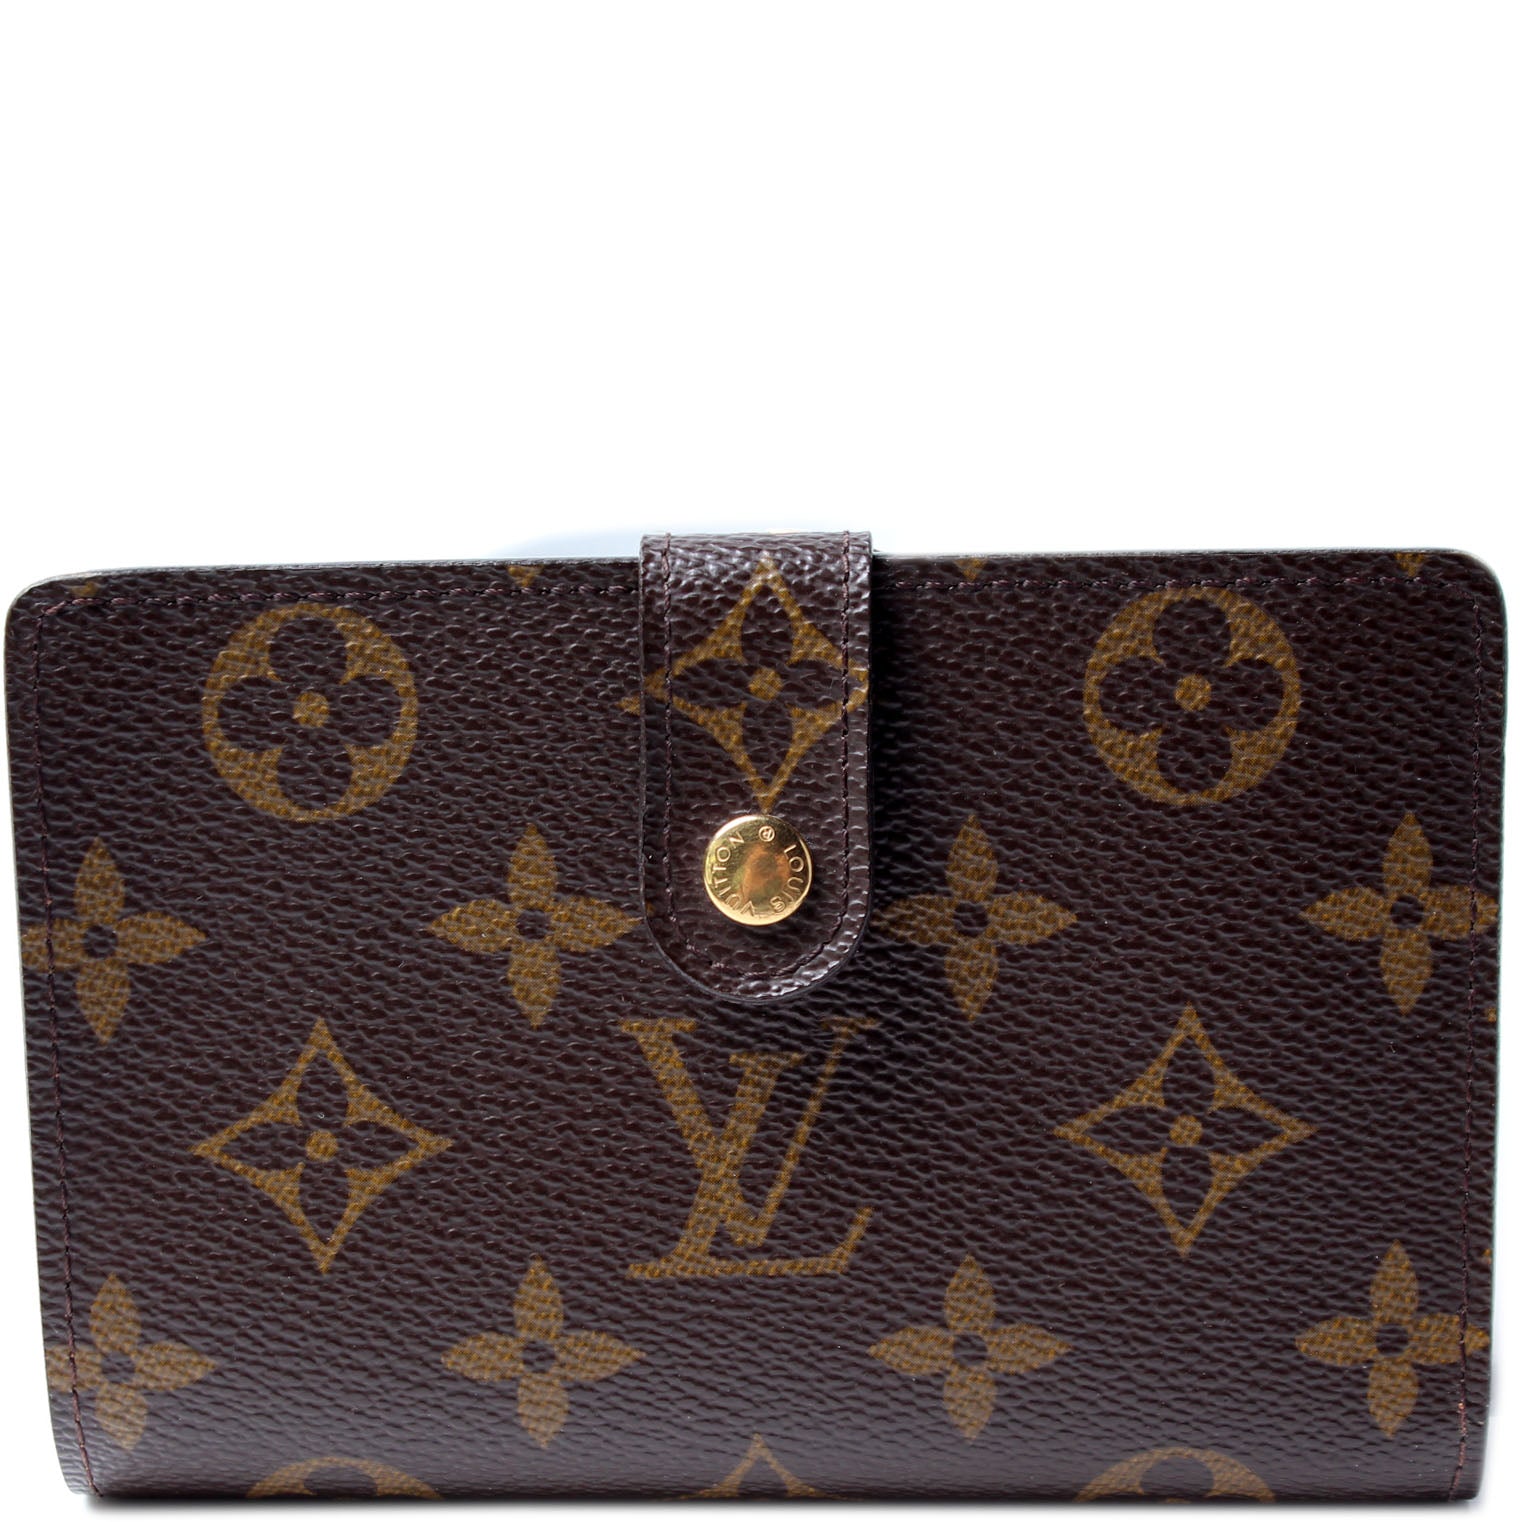 Louis Vuitton French Purse Monogram Wallet